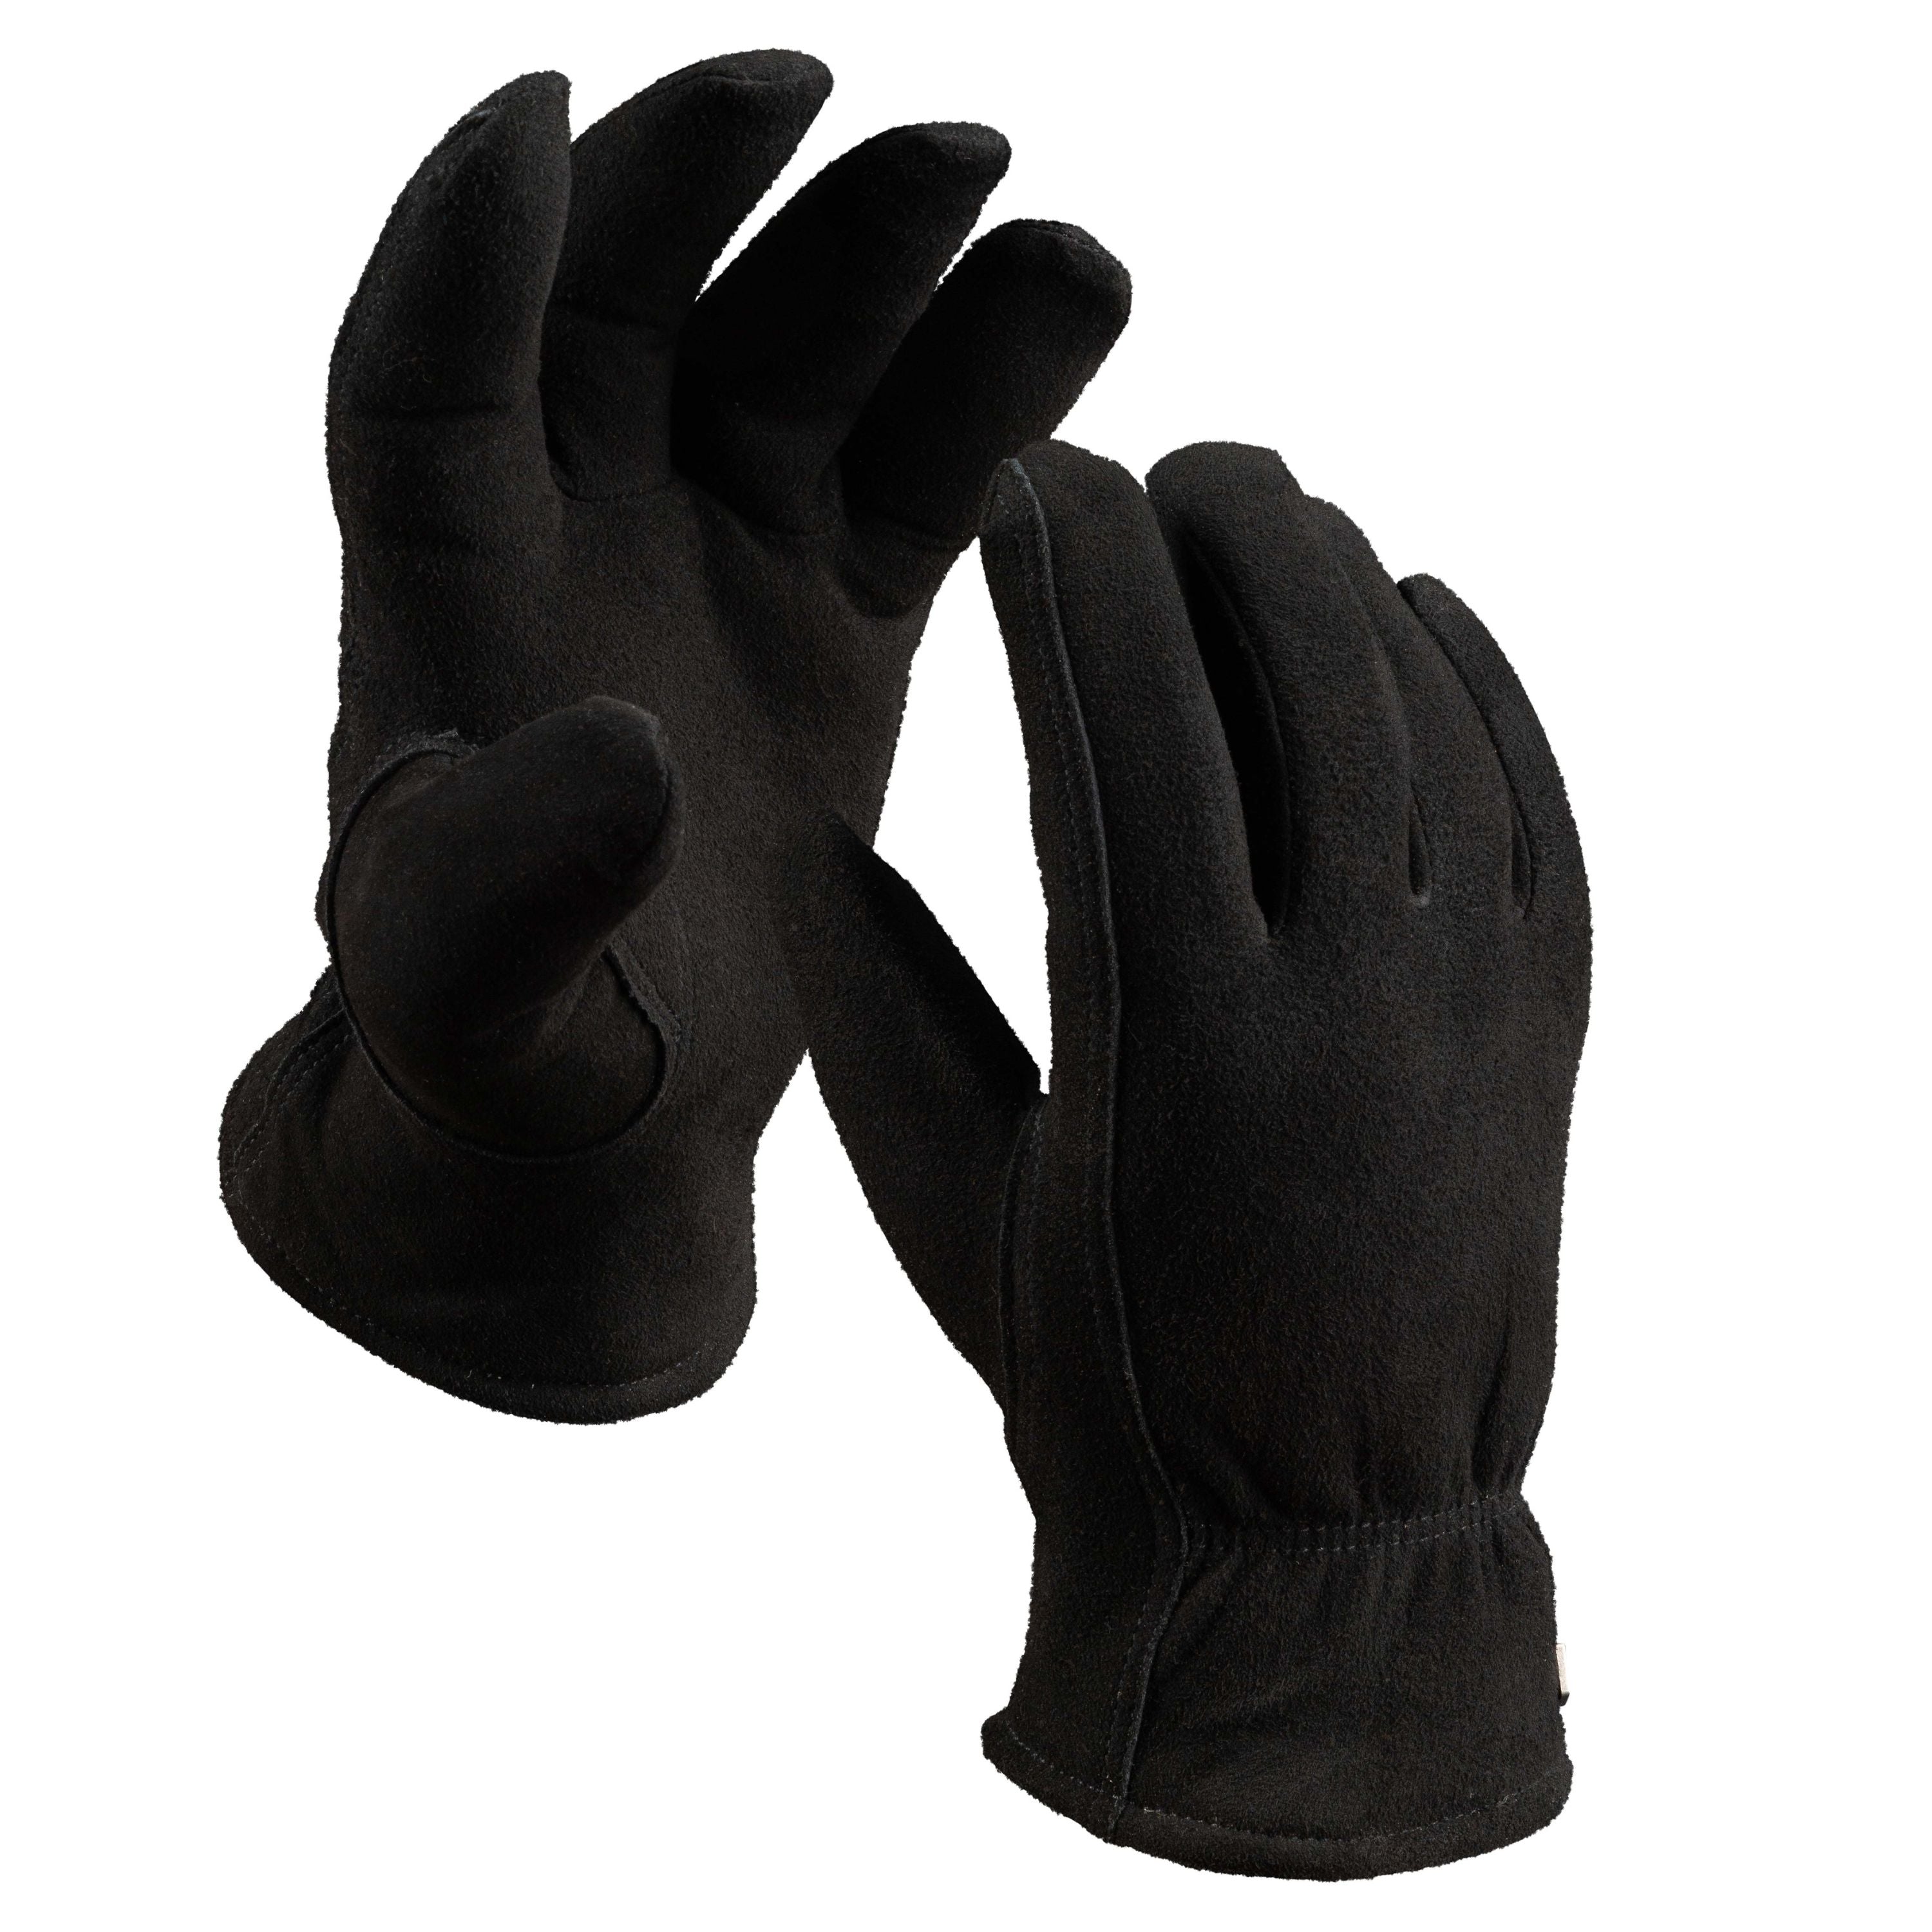 "Chamonix II" Leather city gloves - Women’s